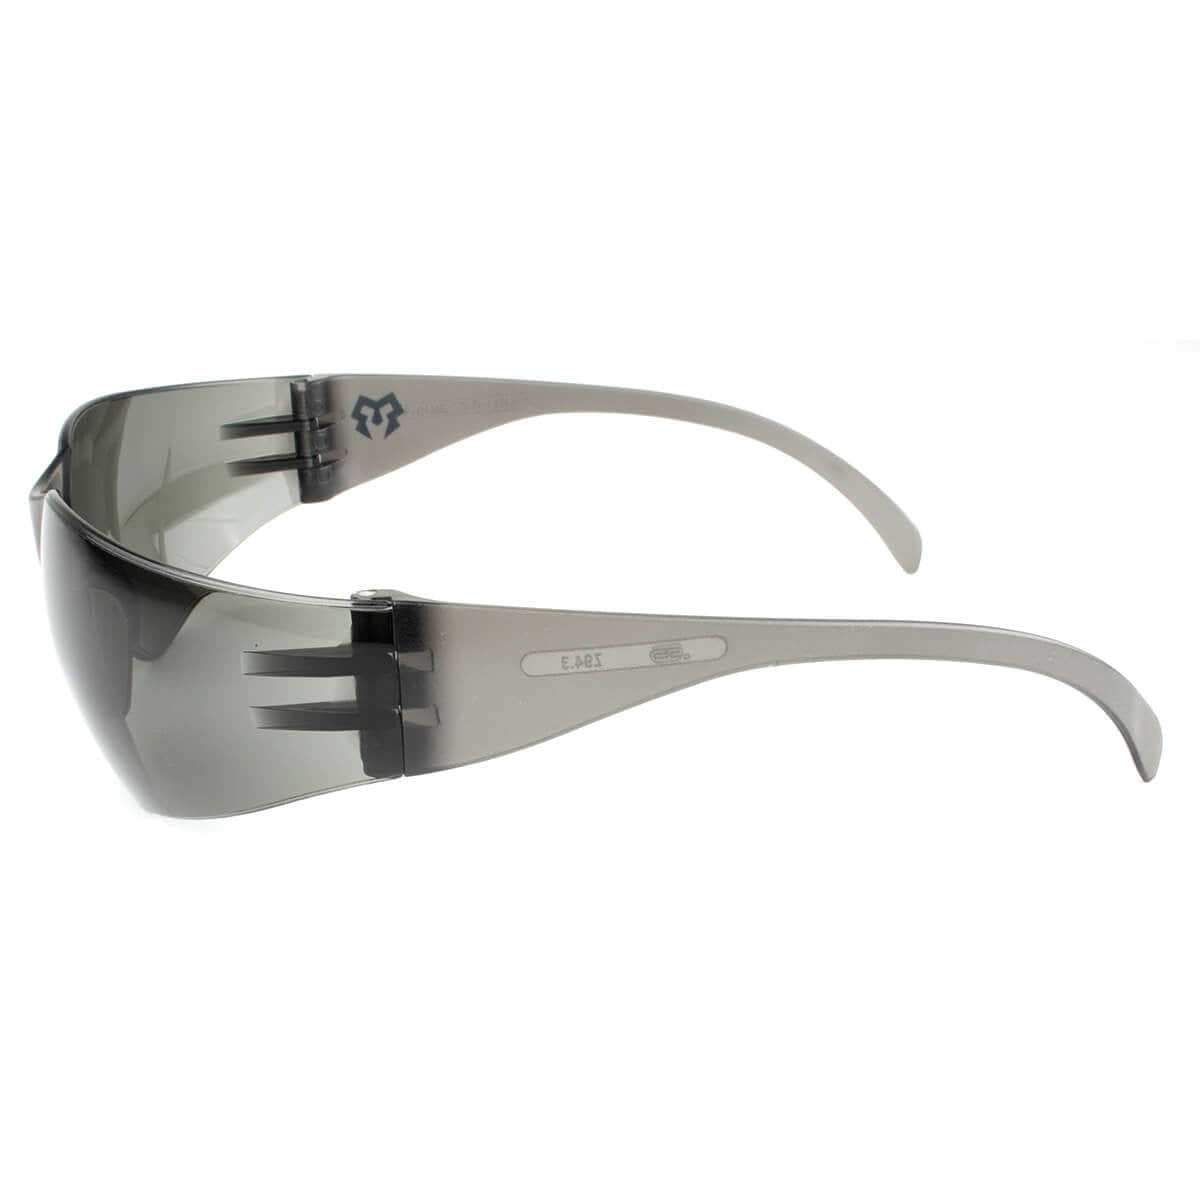 METEL M10 Safety Glasses Ultra-lightweight, Economical, Multiple Lens Options